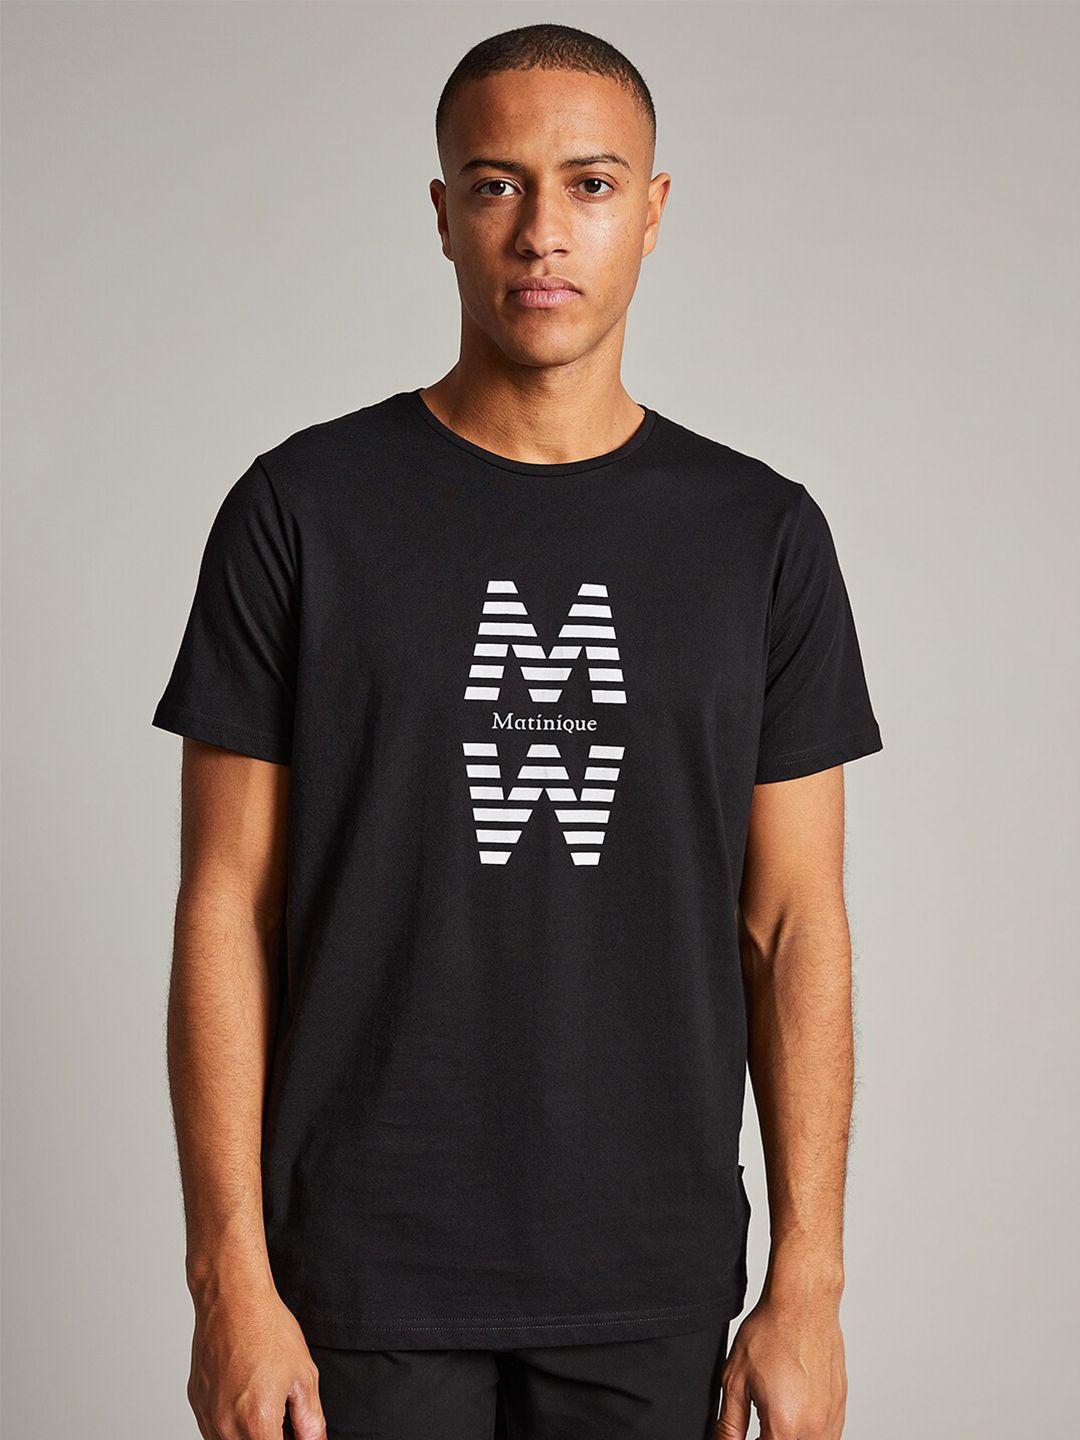 matinique men black & white brand logo printed pure cotton t-shirt